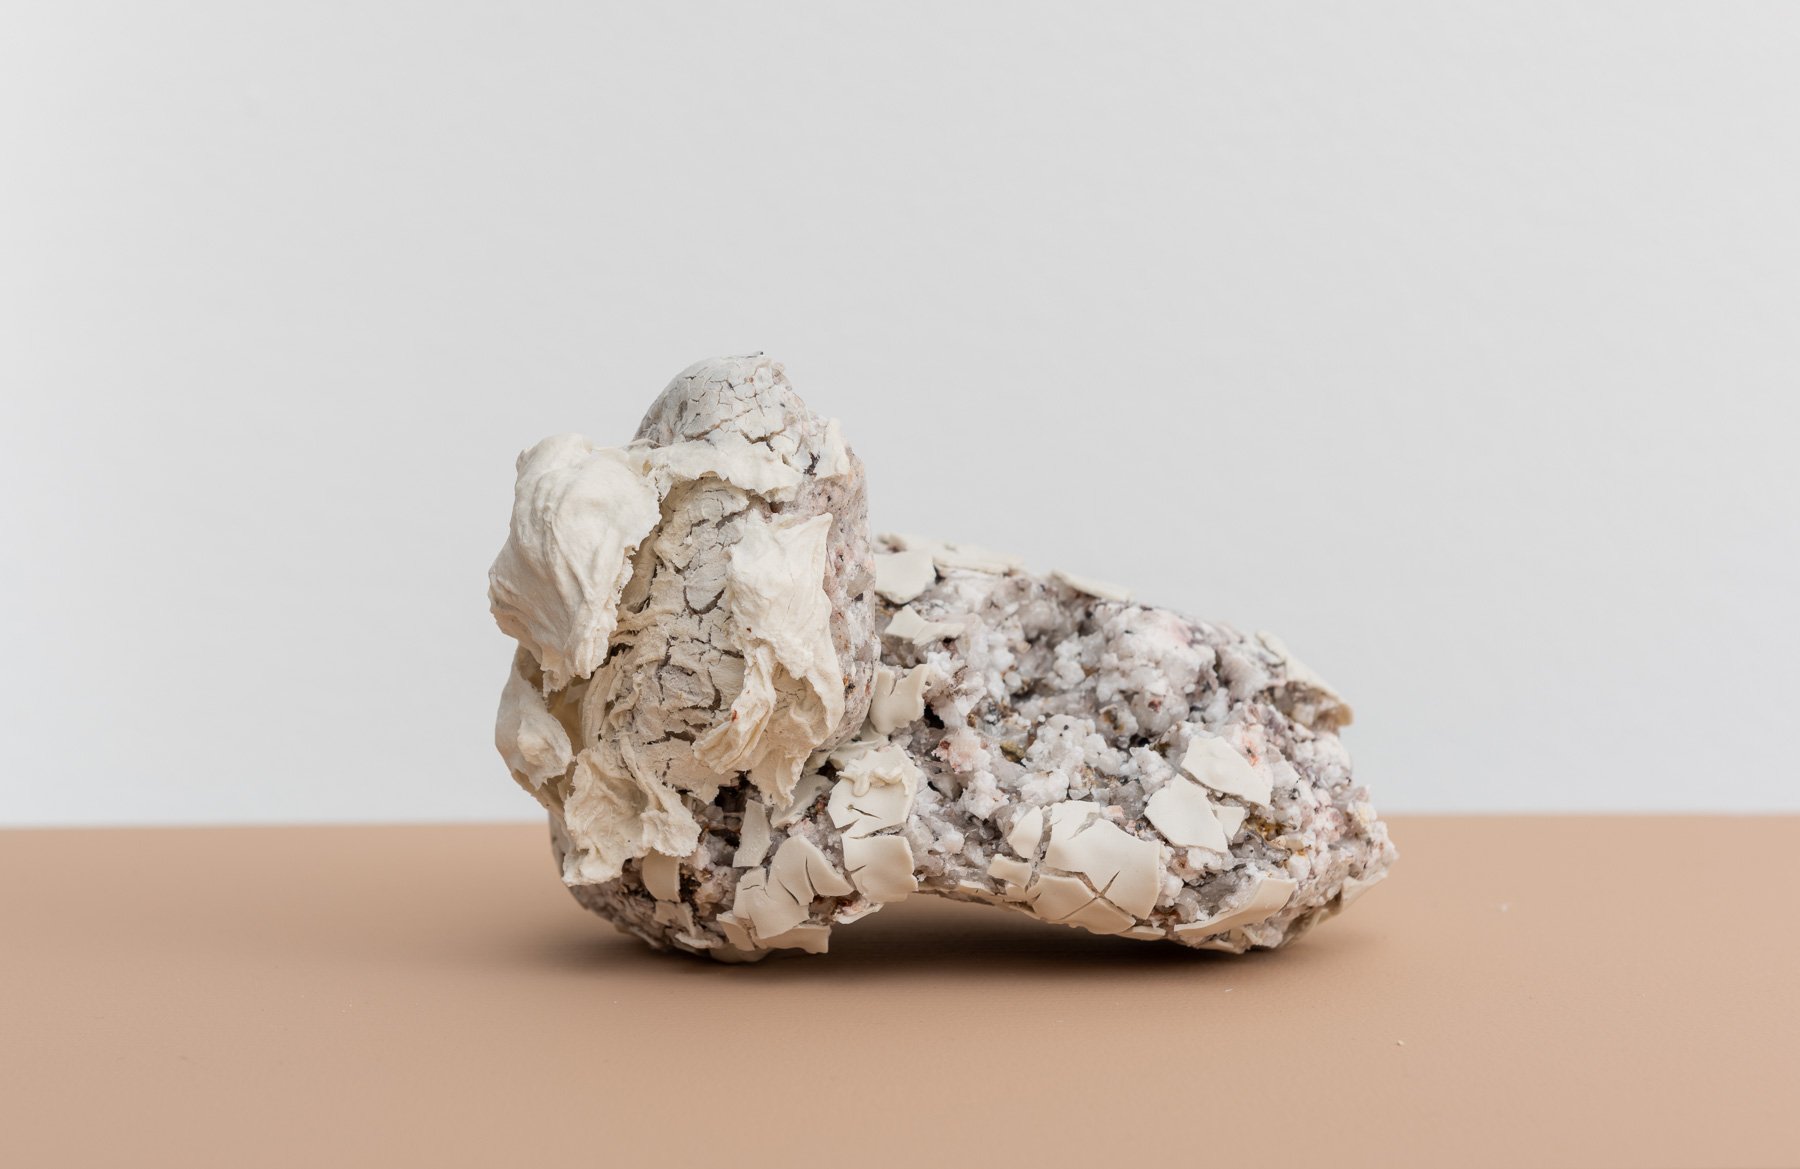  Mineralformer | 2021  Detail  Photo: Thomas Tveter 